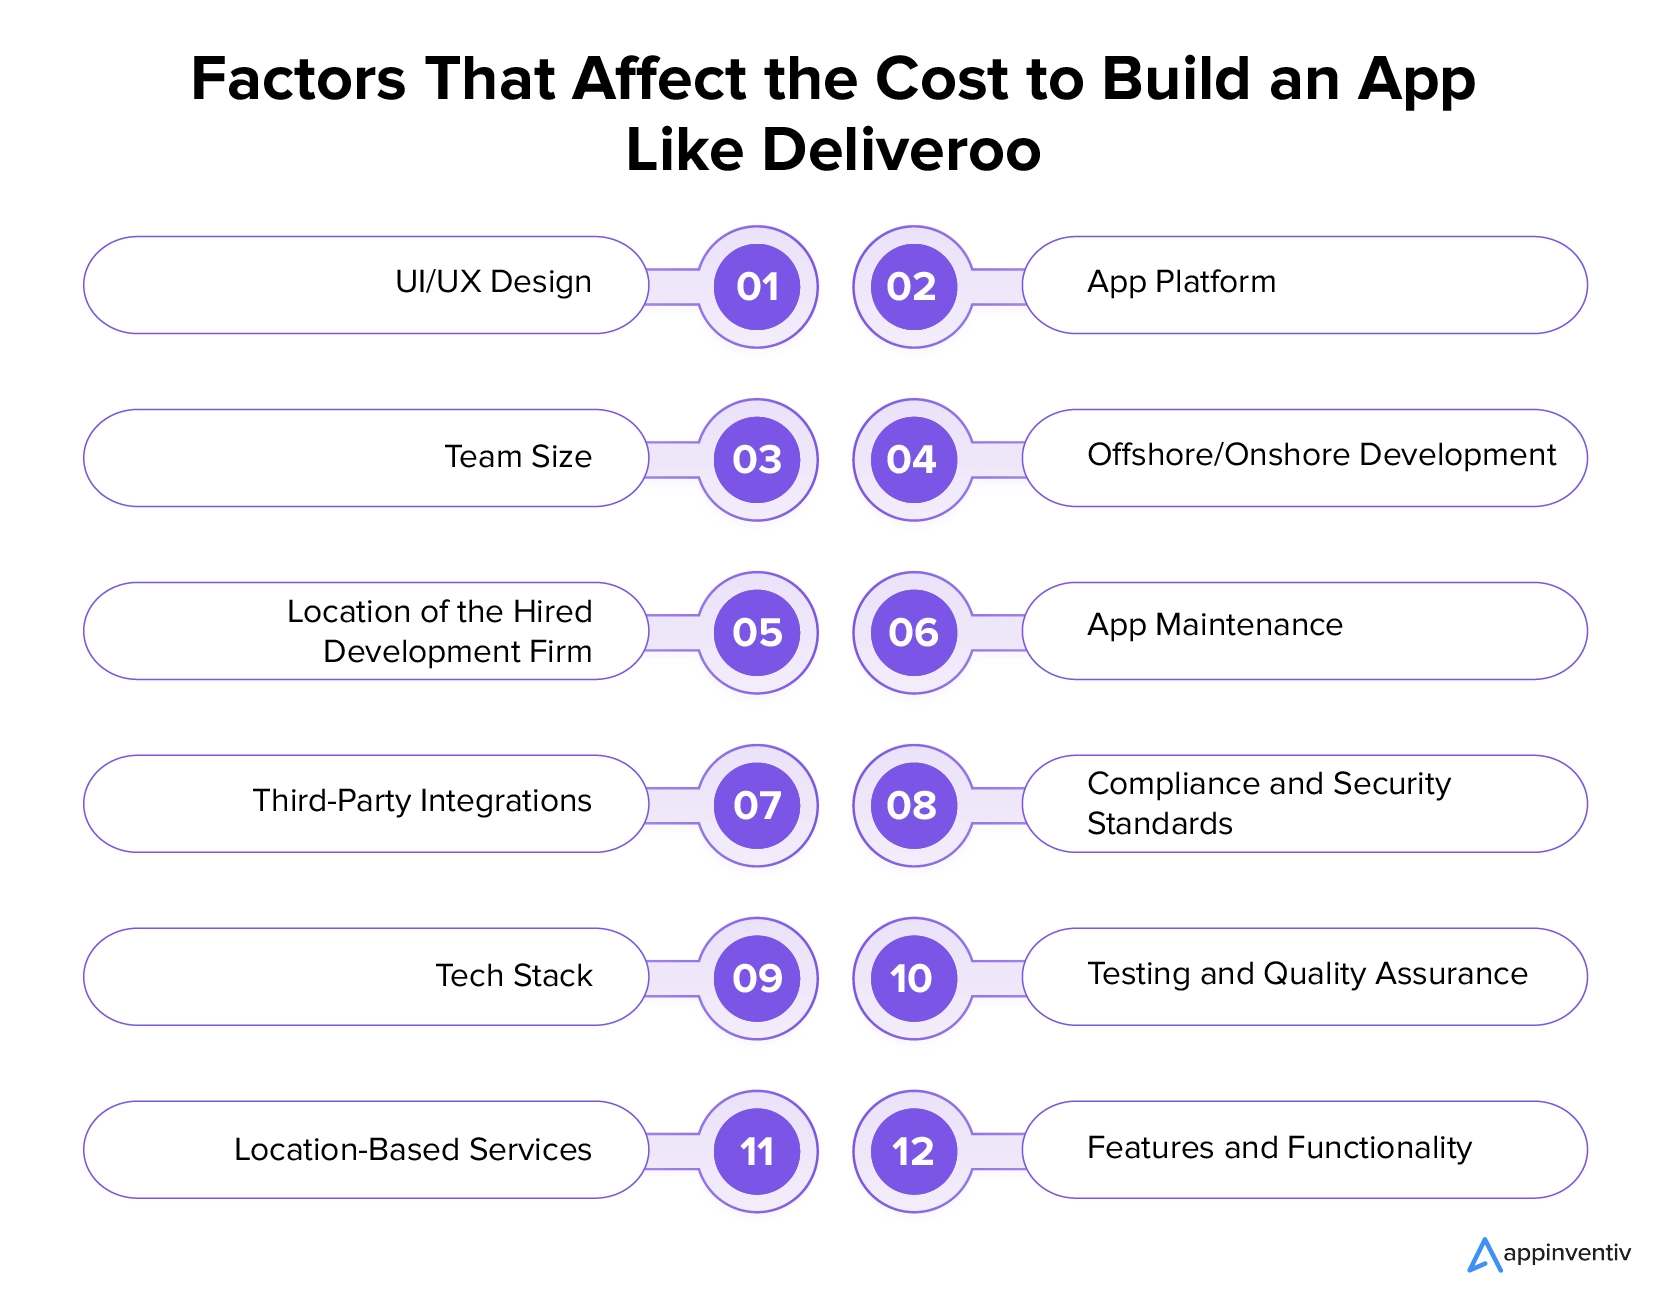 Deliveroo와 같은 앱을 구축하는 데 드는 비용에 영향을 미치는 요소